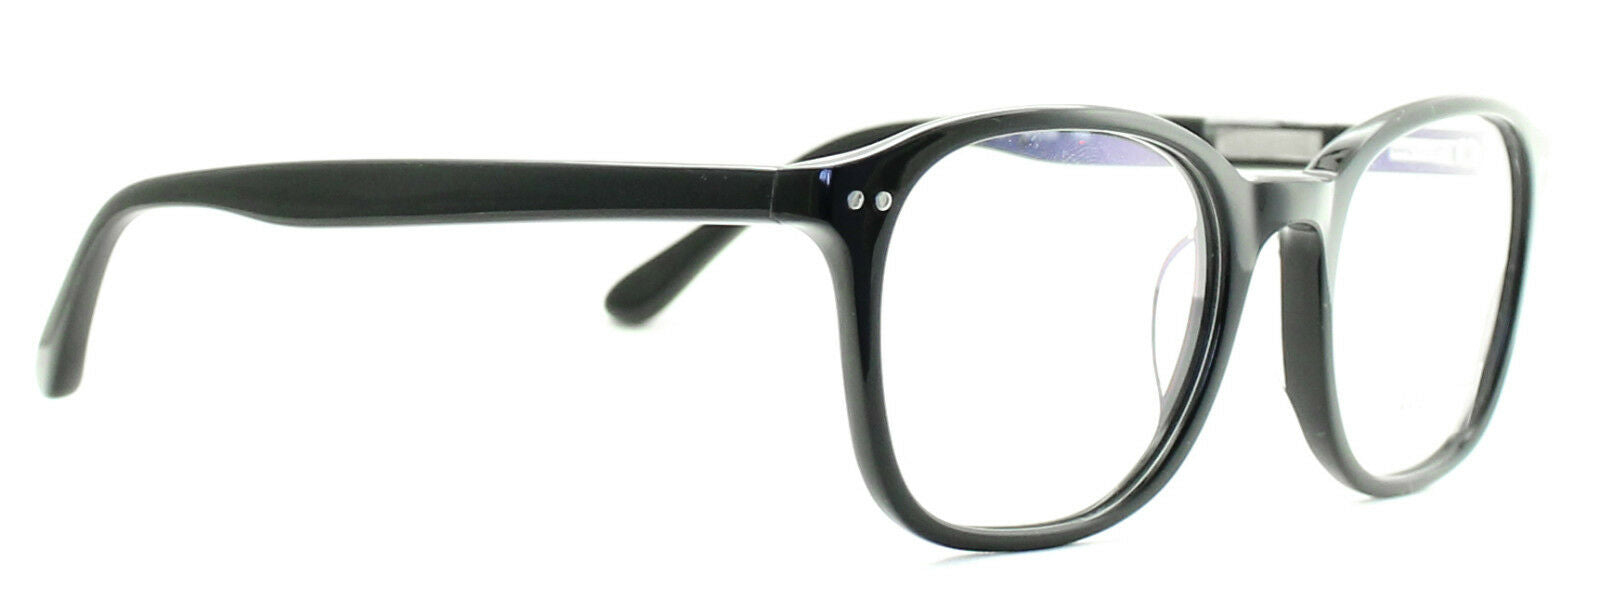 HACKETT Bespoke HEB107 01 Eyewear FRAMES RX Optical Glasses BNIB New Eyeglasses